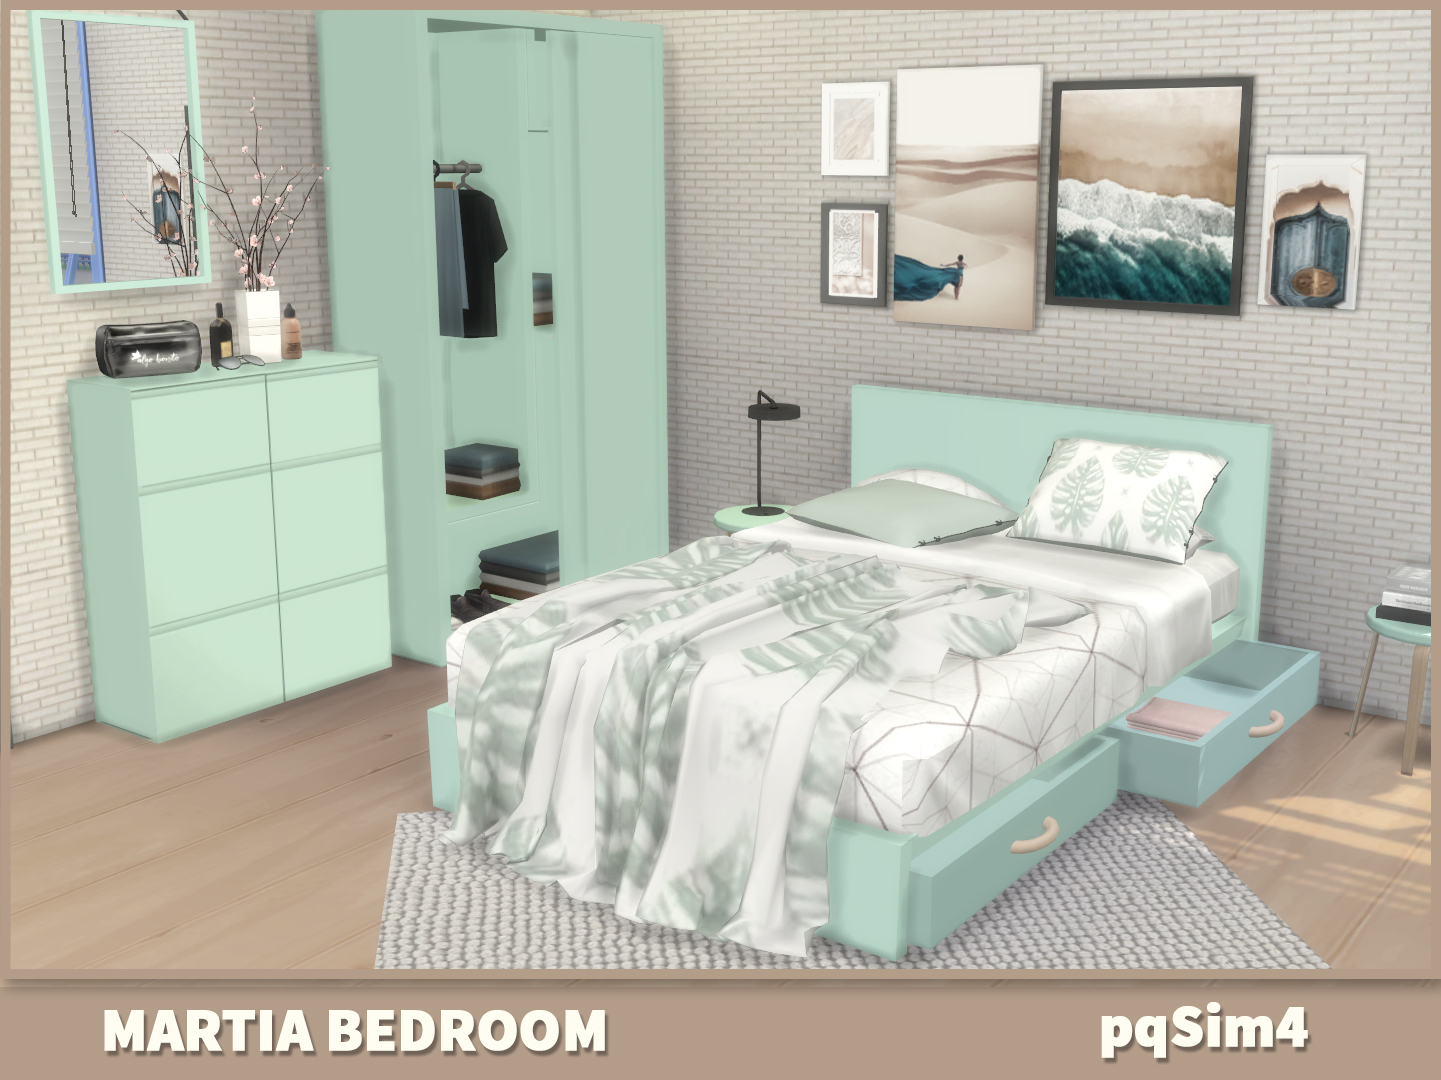 Martia Bedroom The Sims 4 Custom Content